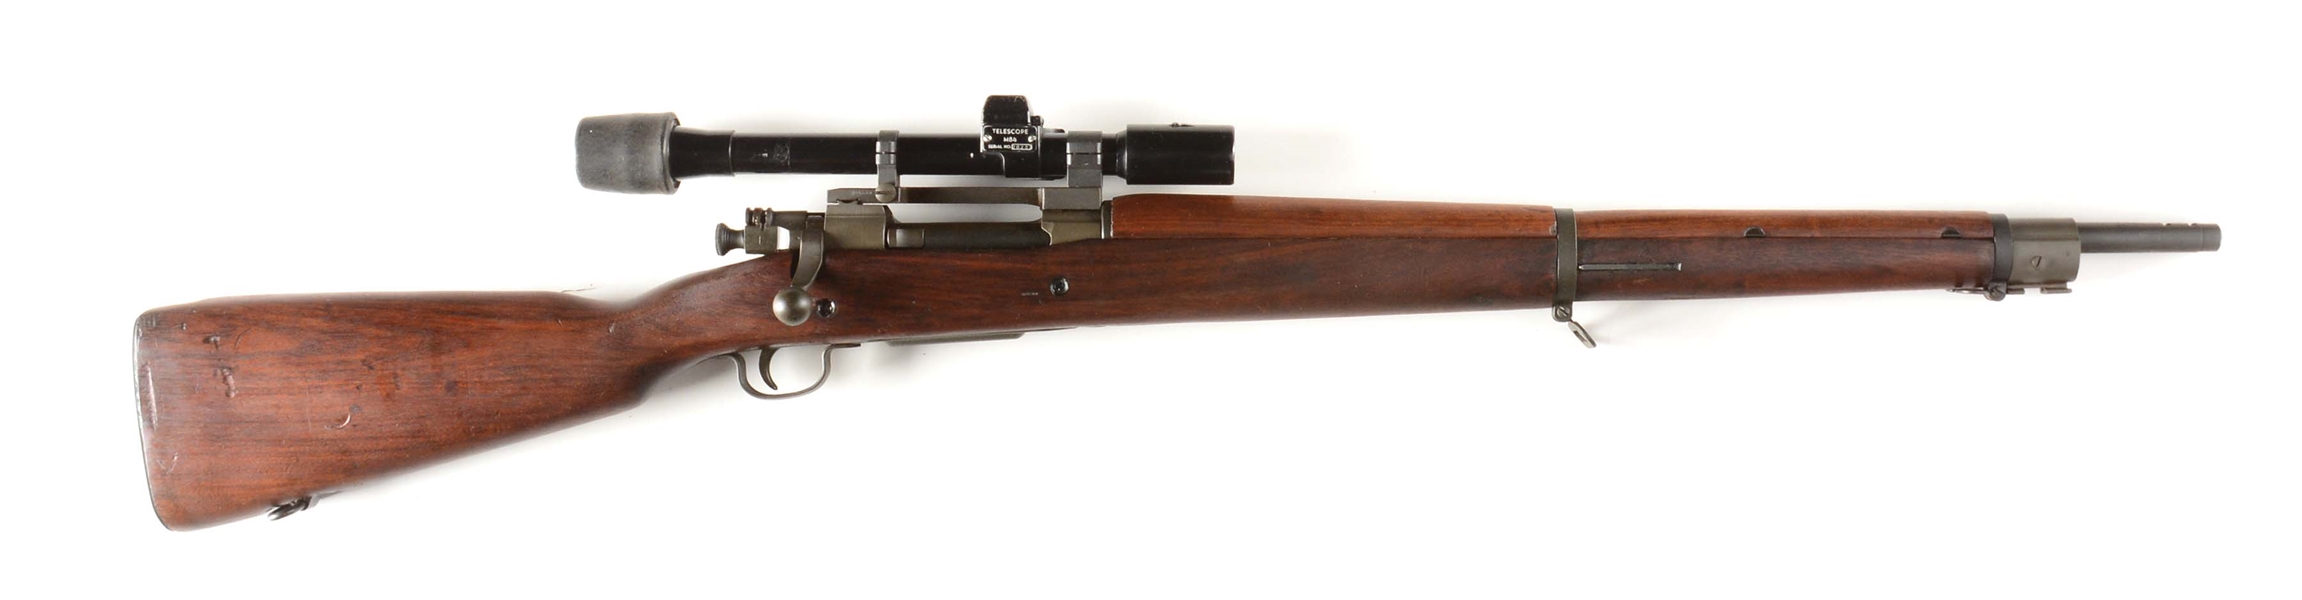 (C) US REMINGTON MODEL 1903-A4 BOLT ACTION RIFLE WITH M84 SCOPE.